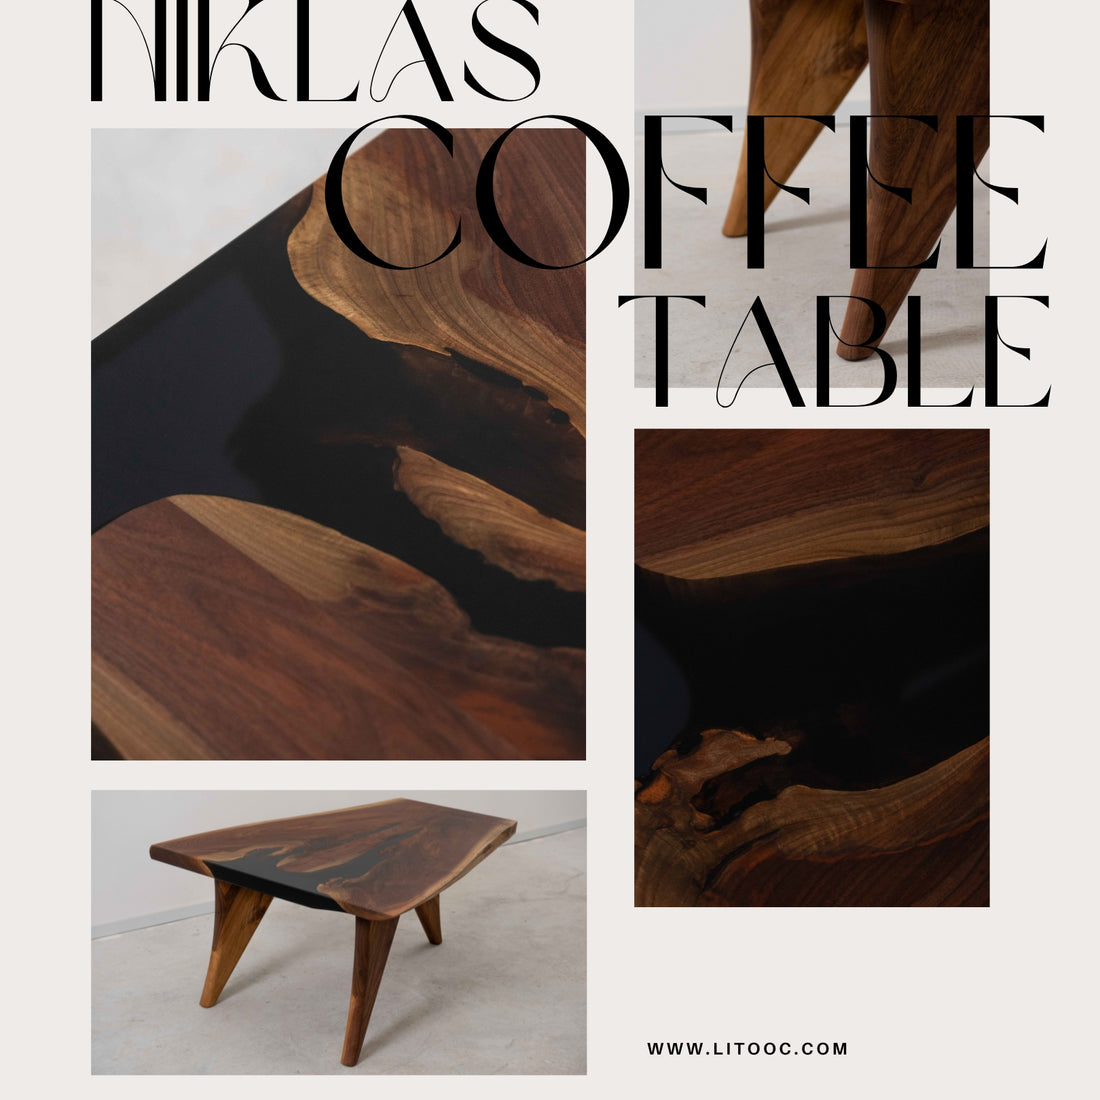 Niklas Coffee Table